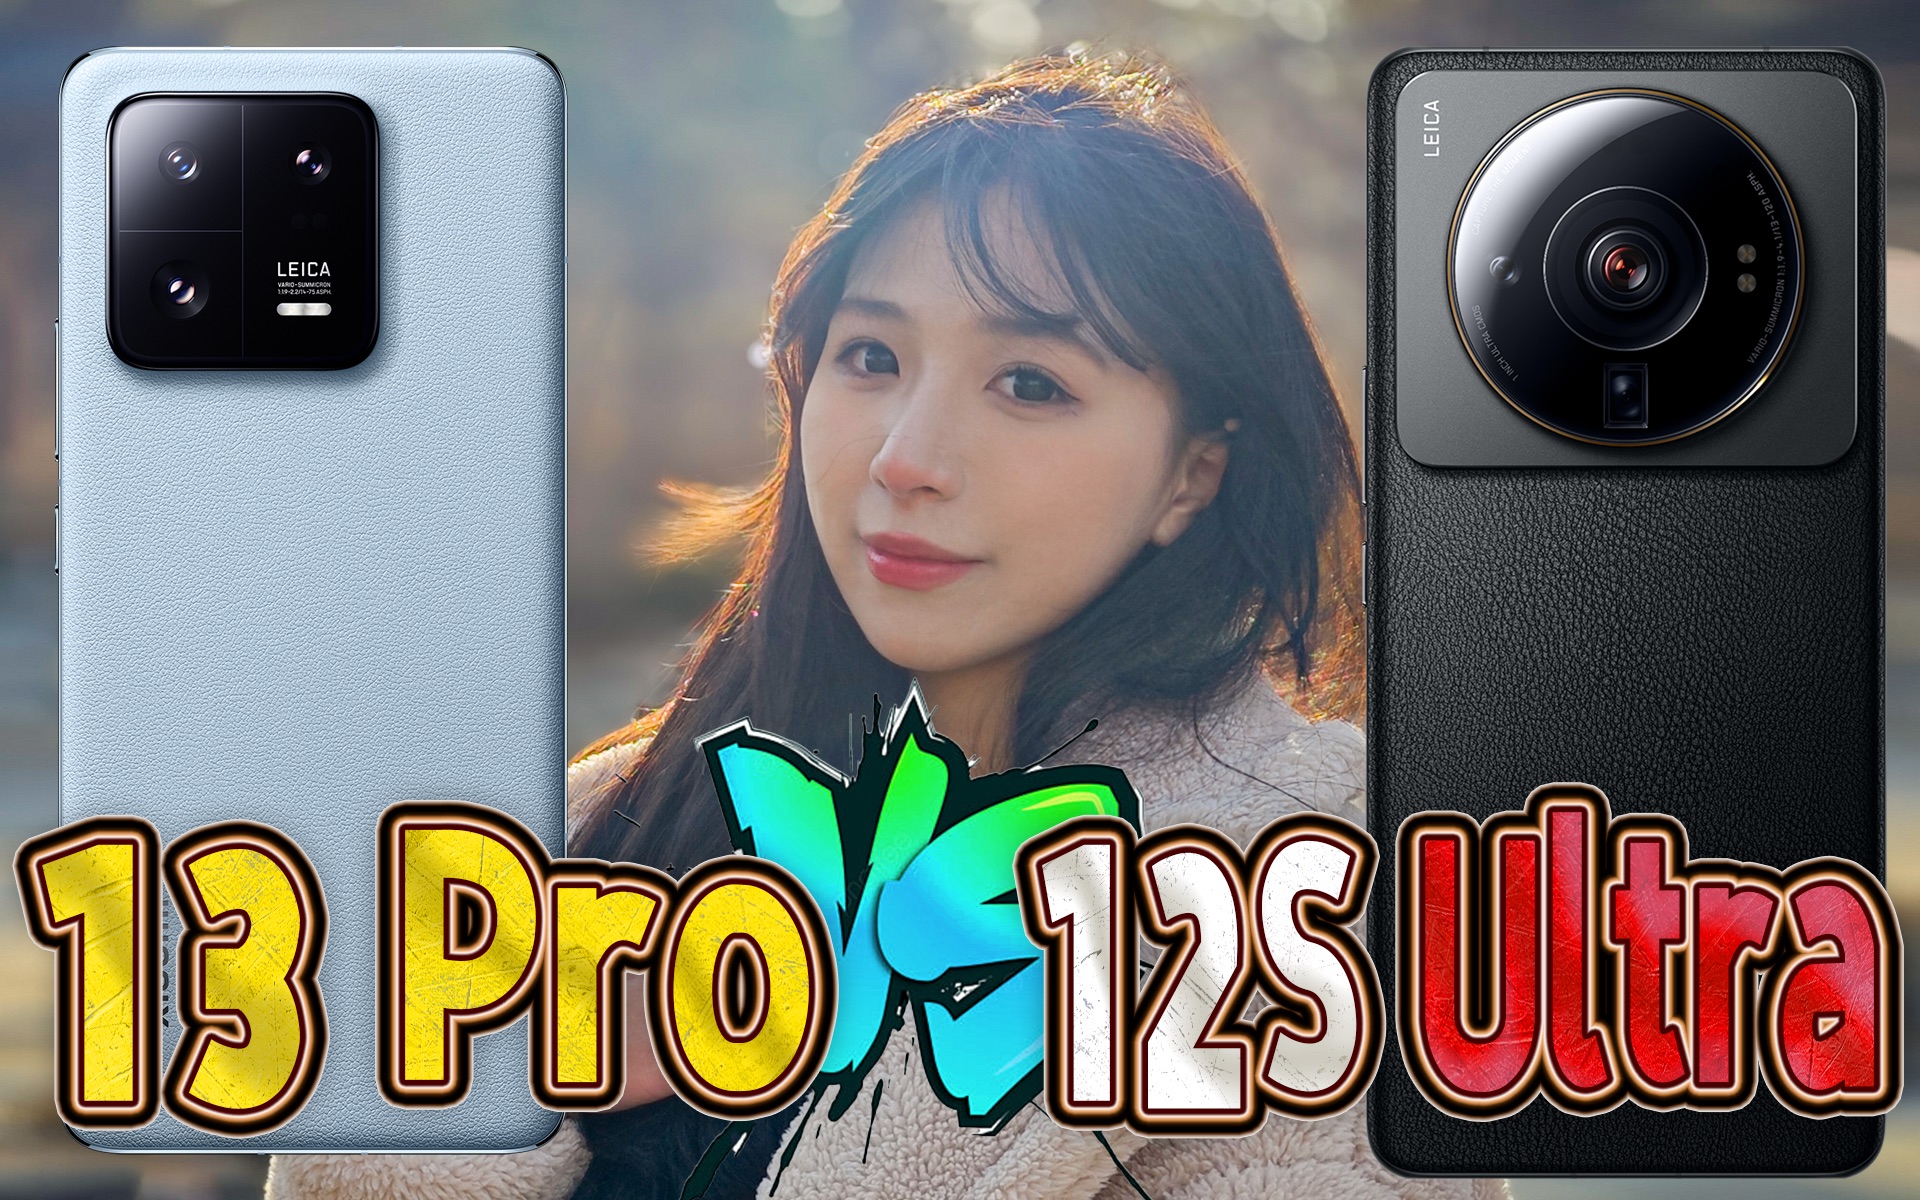 Pro之名Ultra之魂？都是幻觉！小米13 Pro、12S Ultra影像系统全面对比